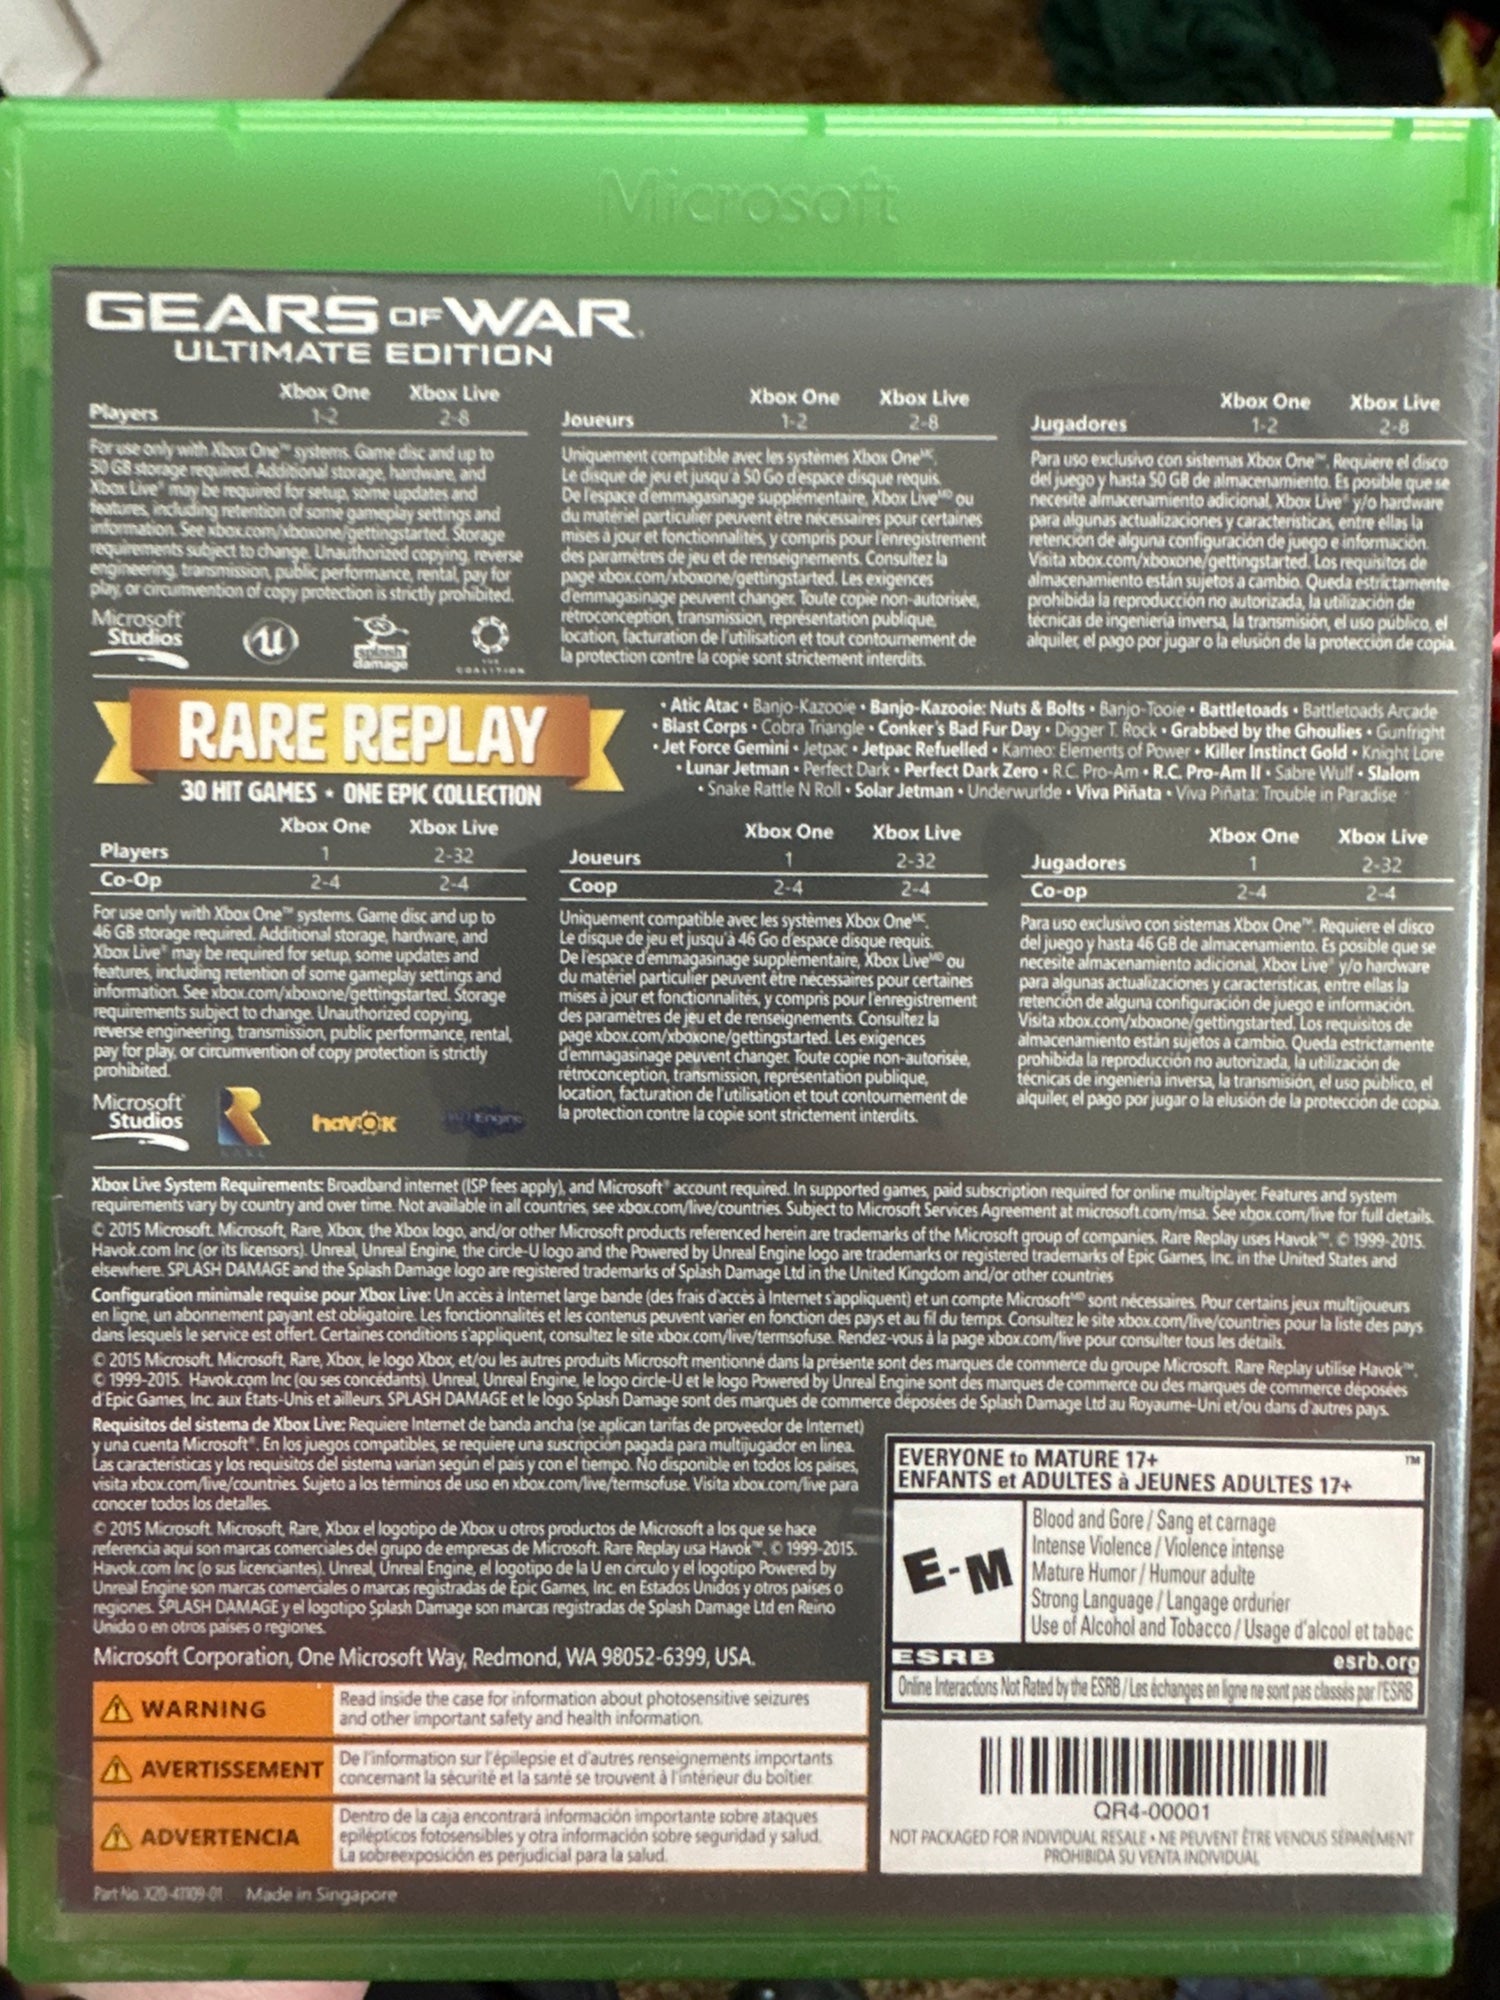 Gears of War Ultimate Edition, Killer Instinct coming